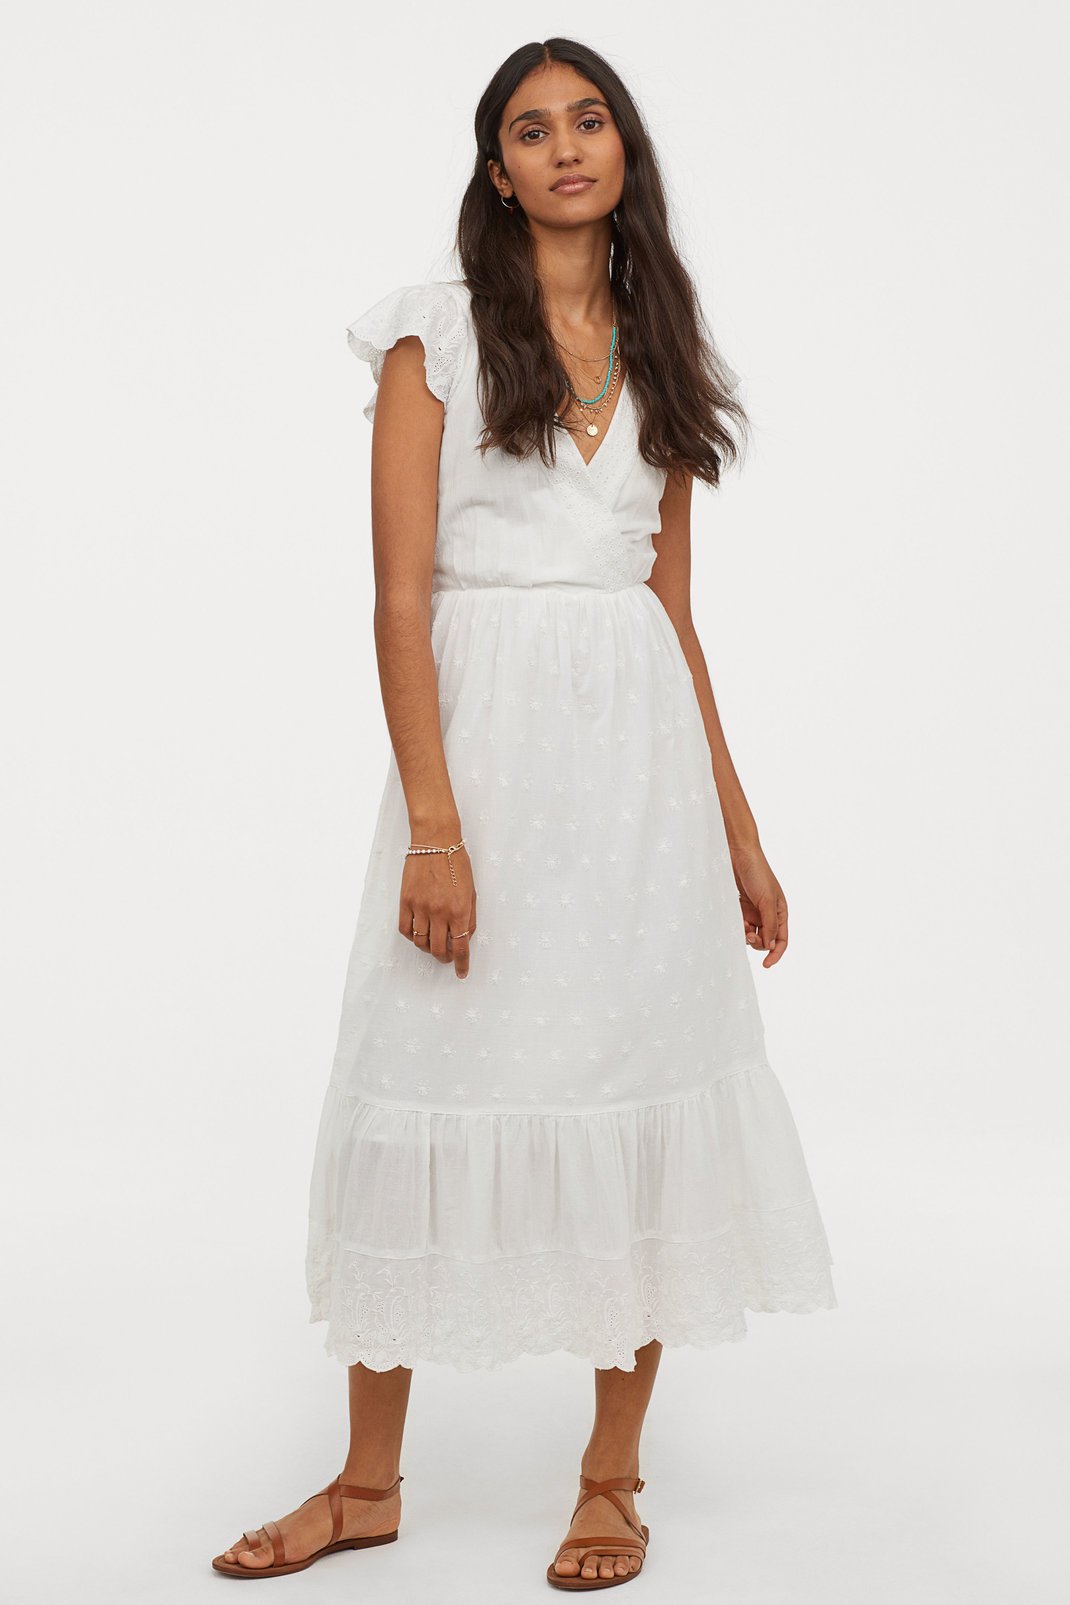 Installation The other day Dizziness Τα ωραιότερα λευκά φορέματα του καλοκαιριού -Θα αναδείξουν την μαυρισμένη  επιδερμίδα σου | BOVARY